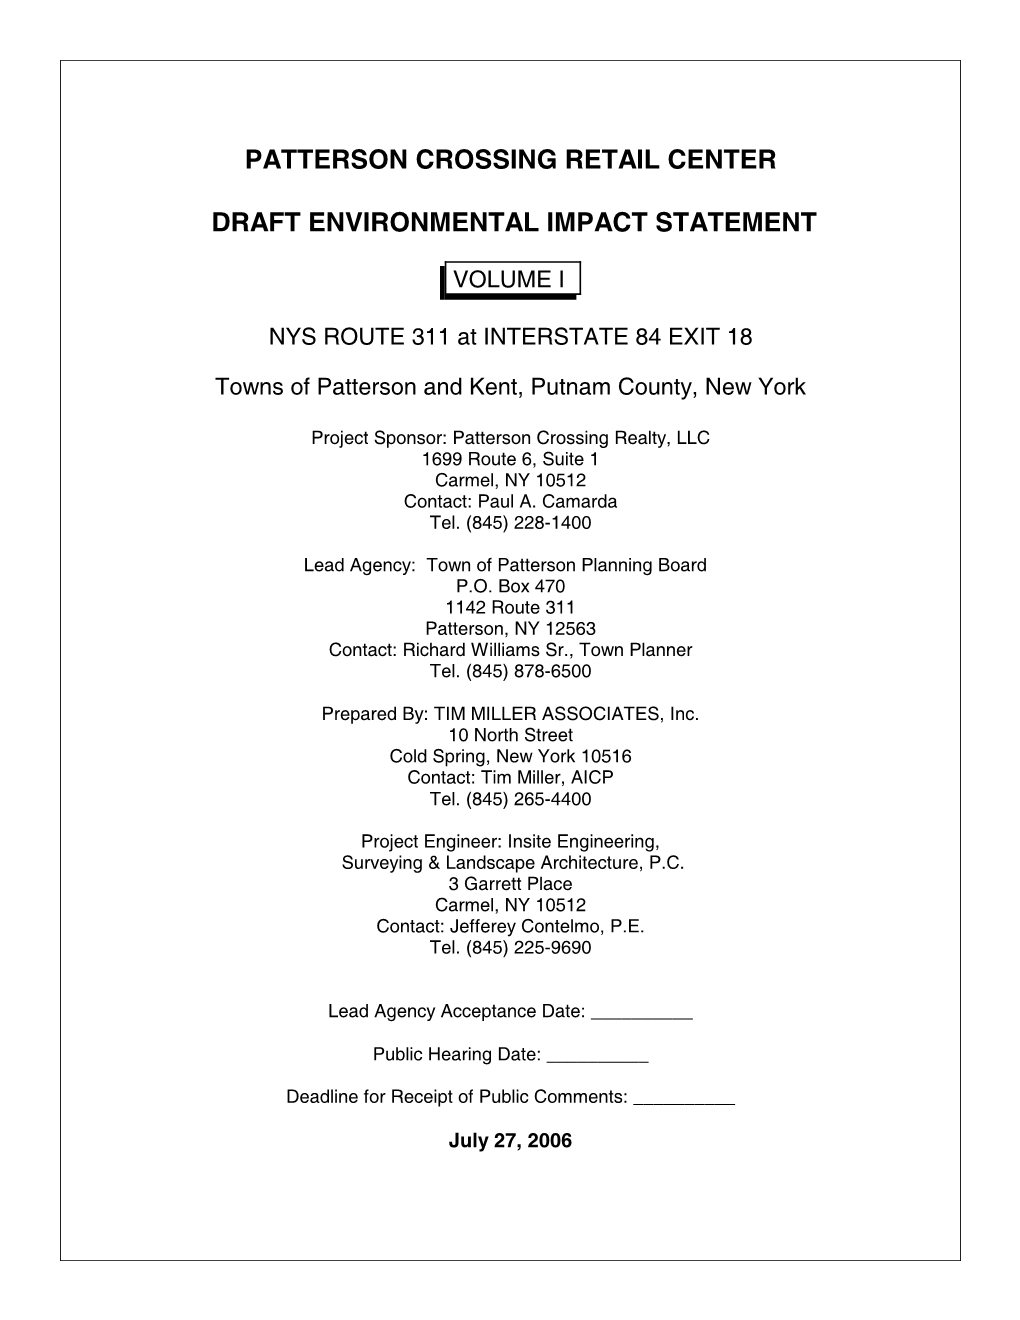 PATTERSON CROSSING RETAIL CENTER Draft Environmental Impact Statement